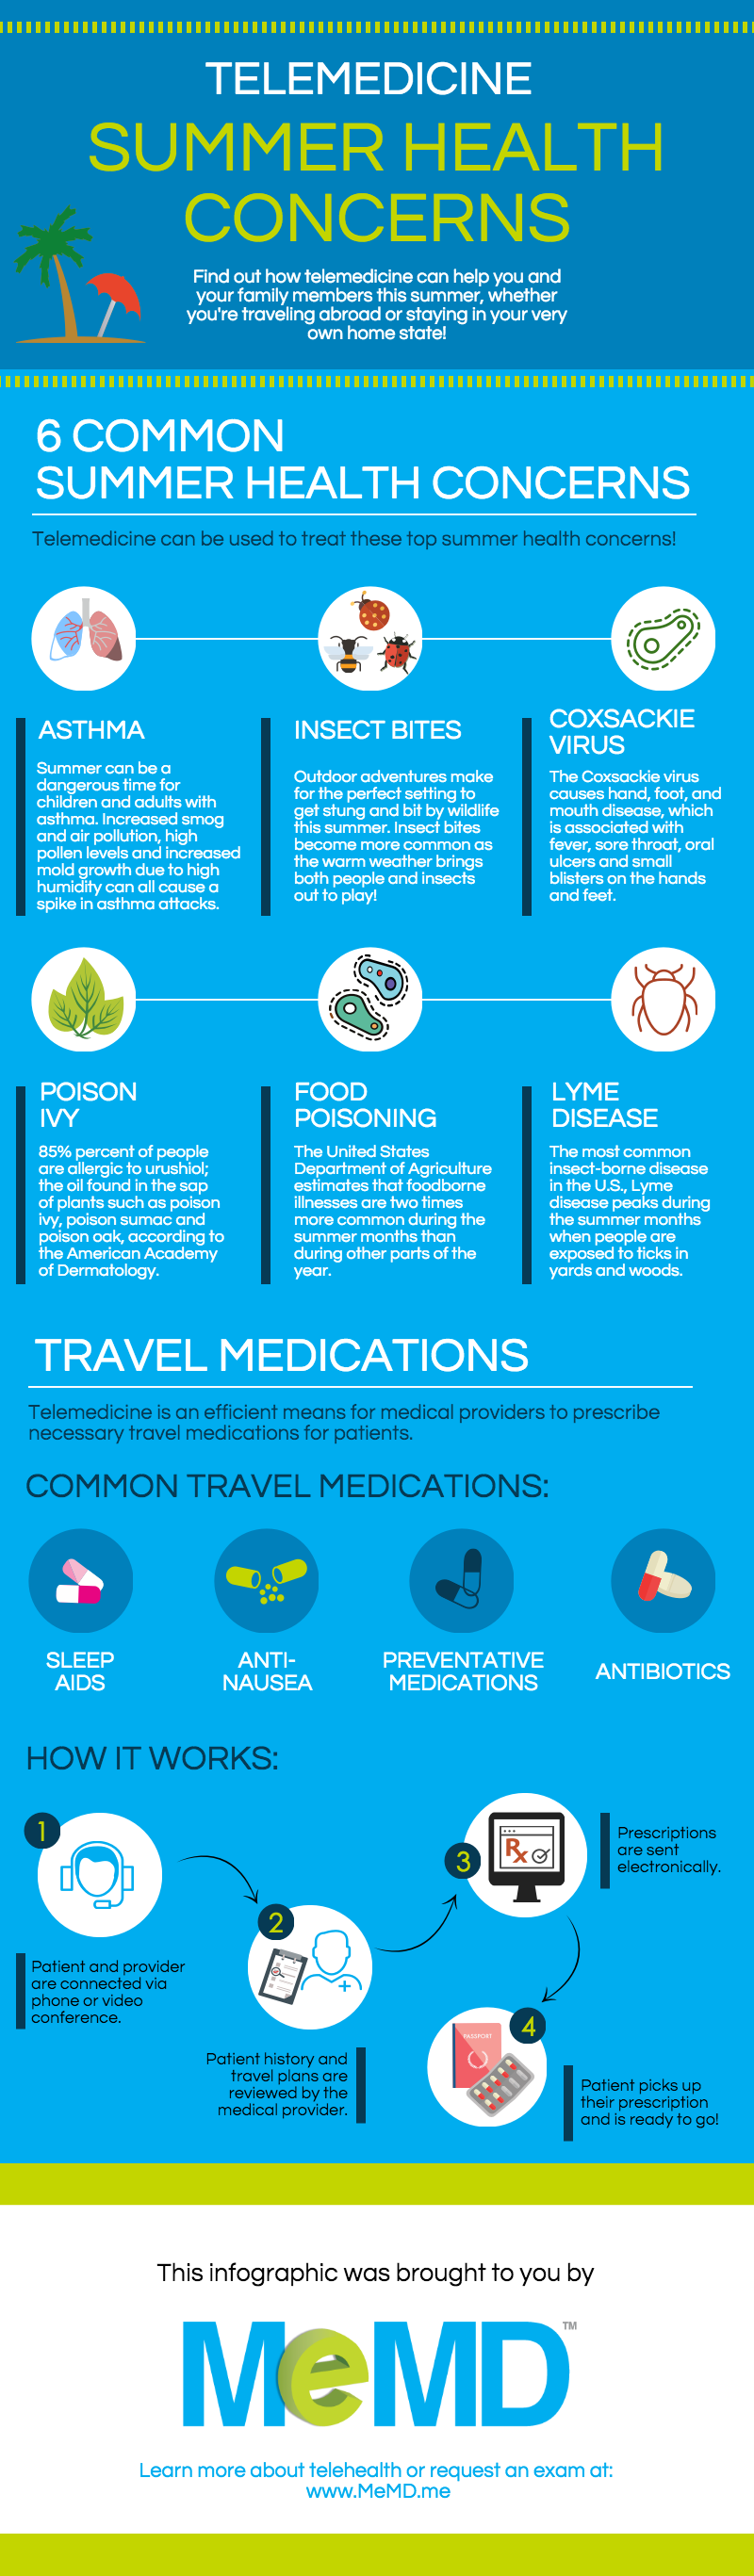 blog-infographic-summer-health-concerns-telemedicine